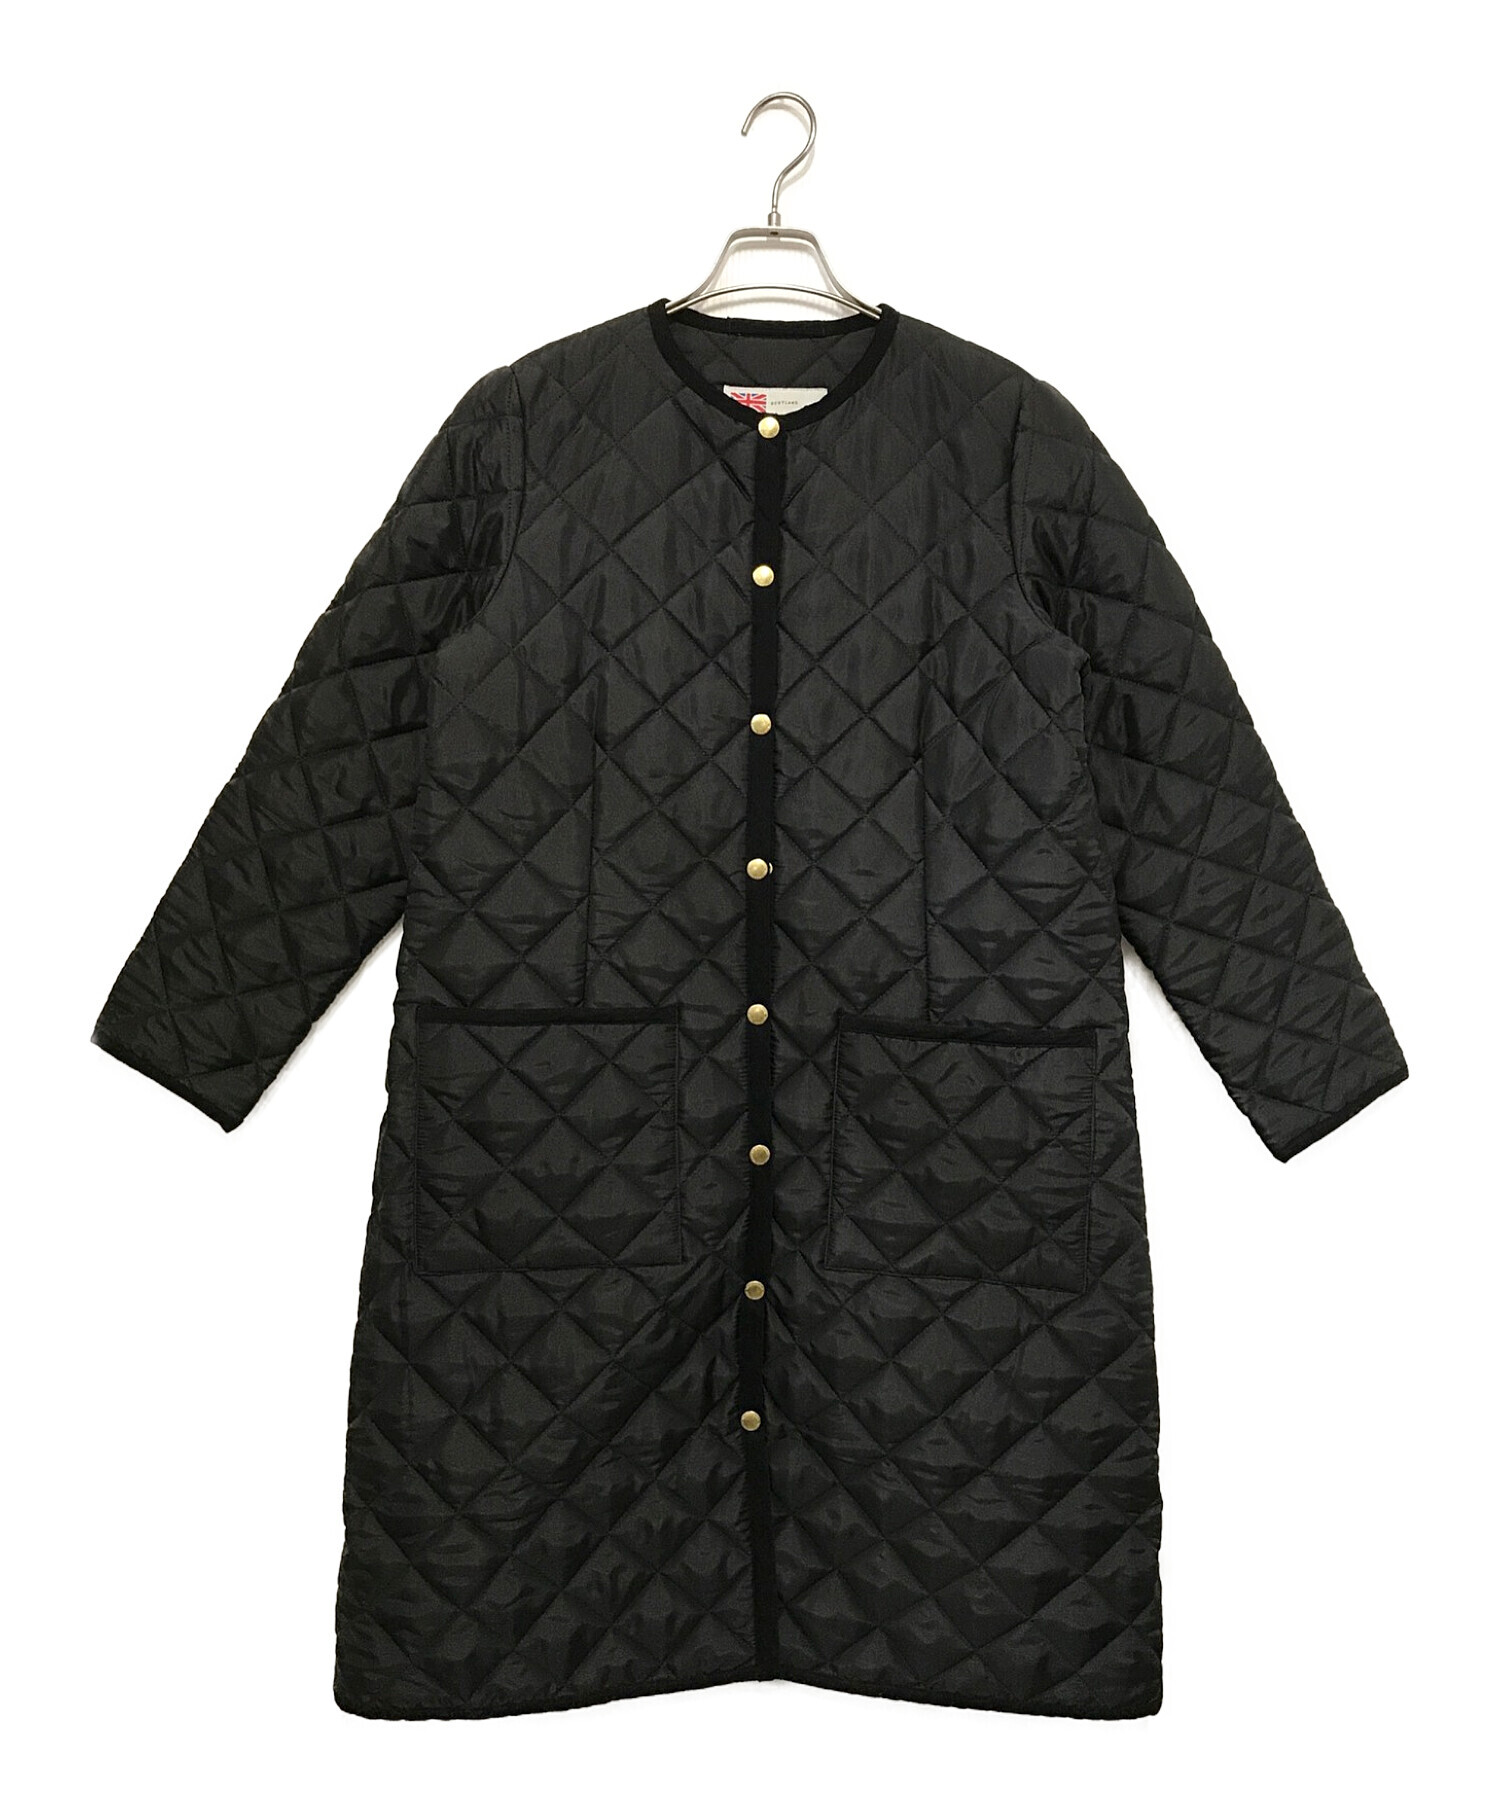 Traditional Weatherwear (トラディショナルウェザーウェア) ARKLEY LONG / アークリー ロング ブラック  サイズ:36